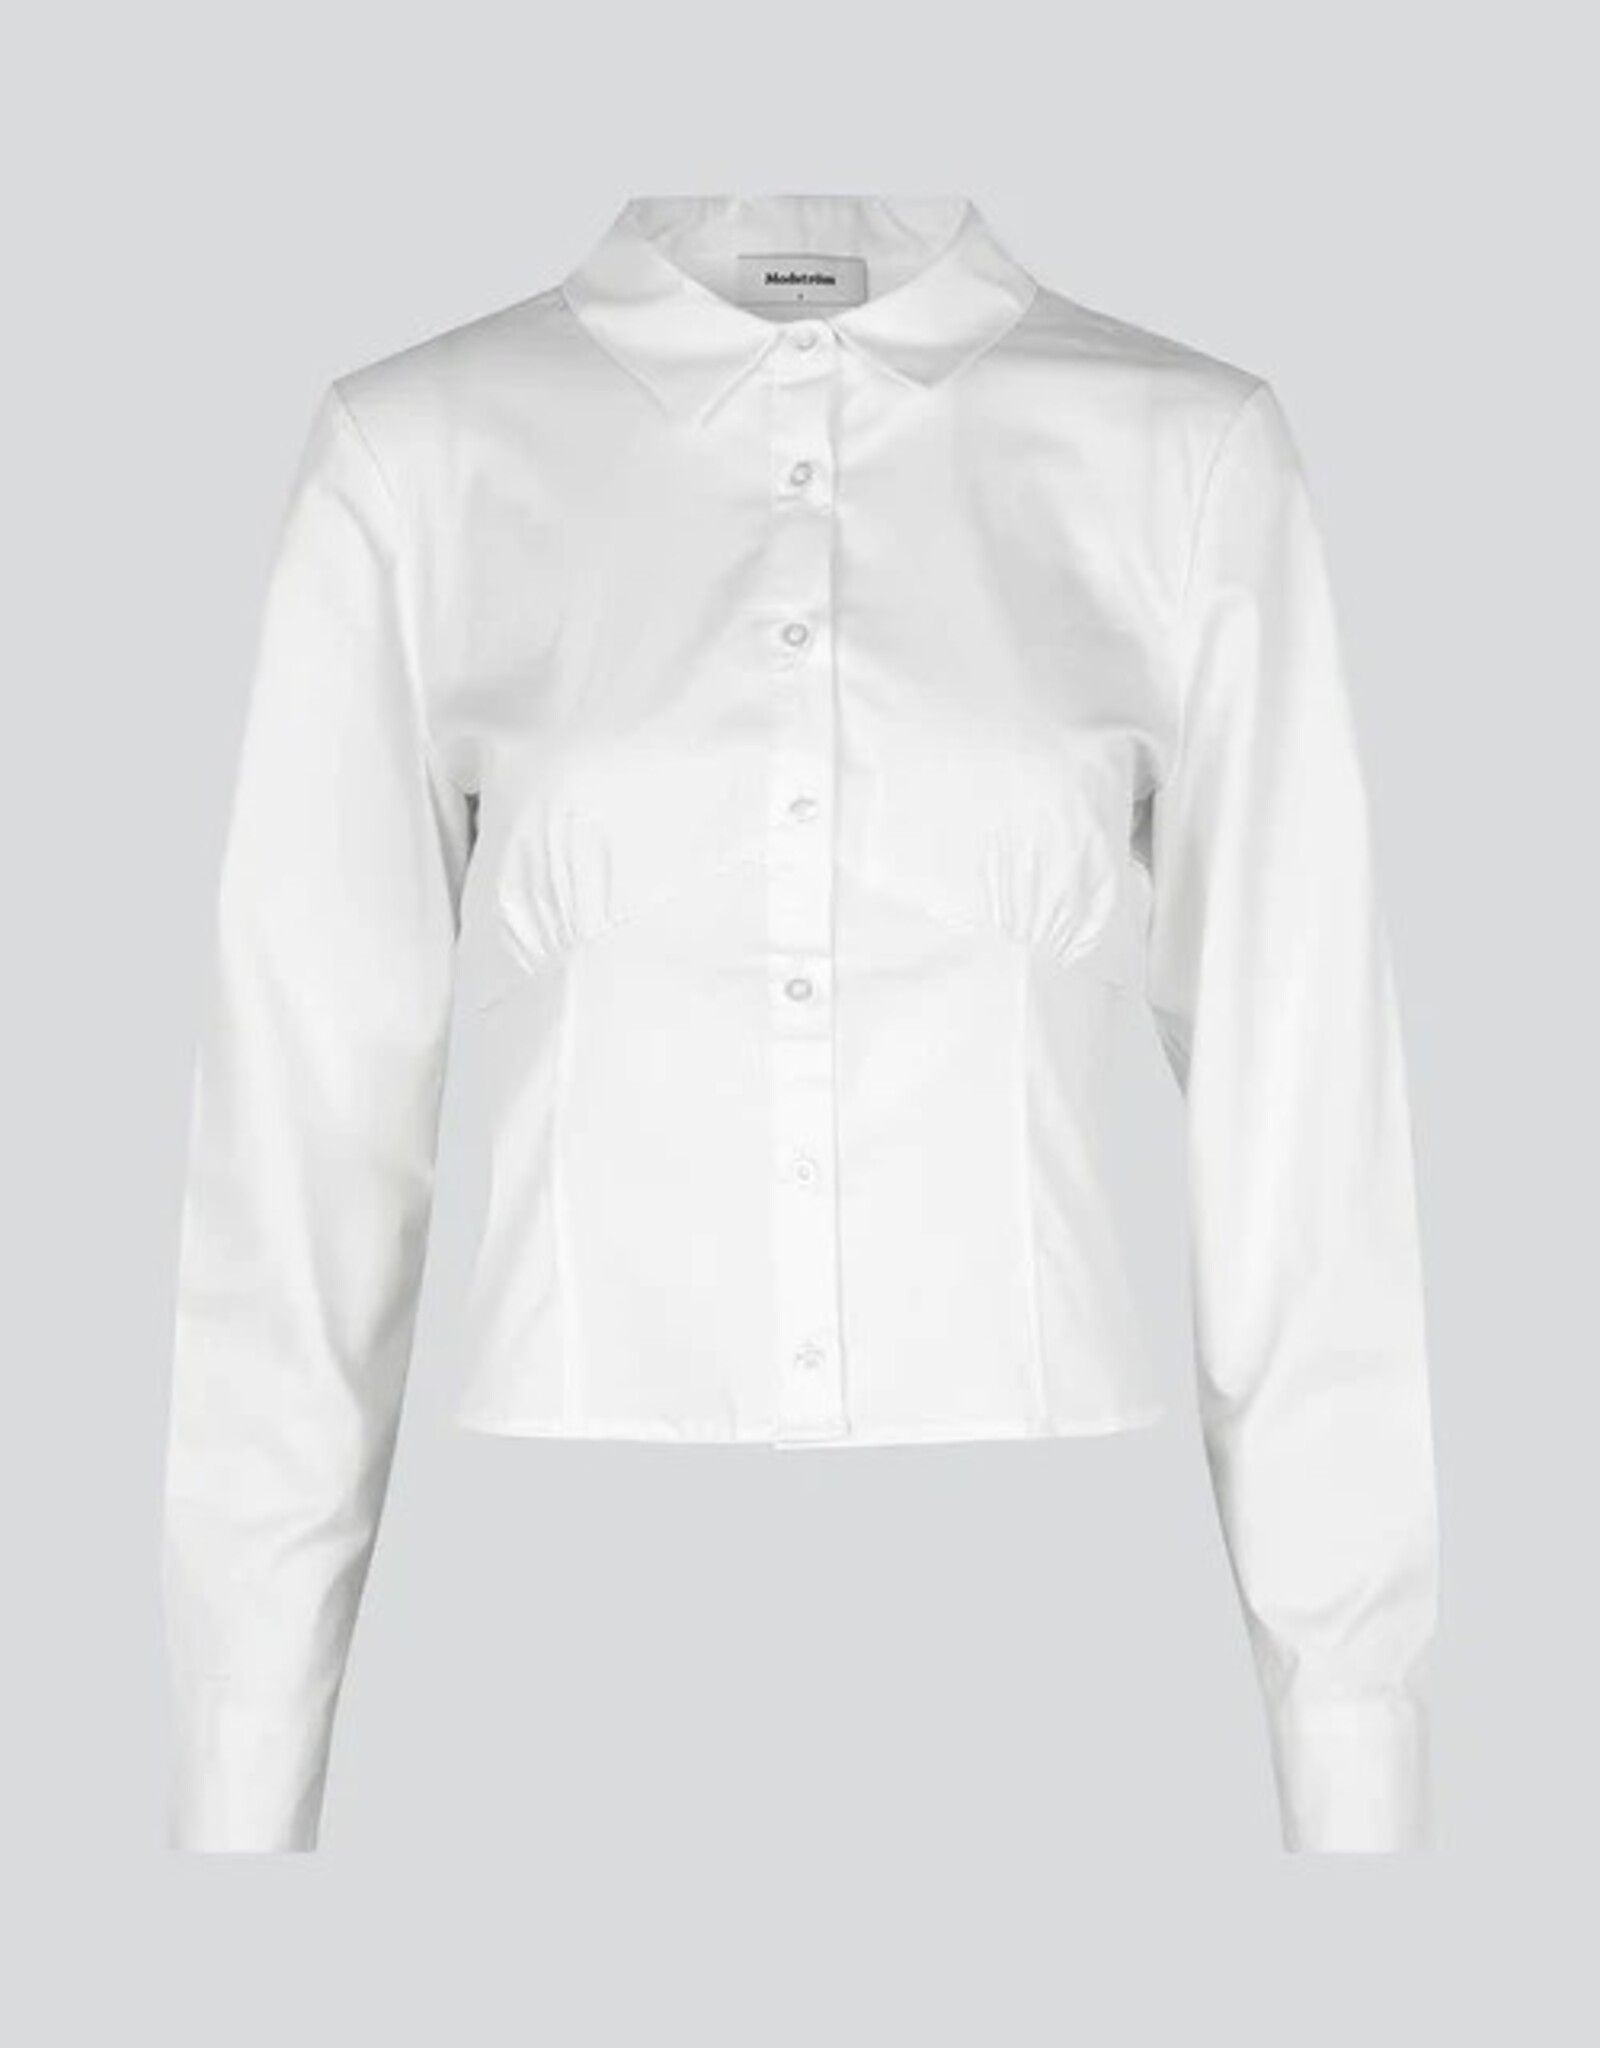 Modstrom Harrison Shirt Soft White